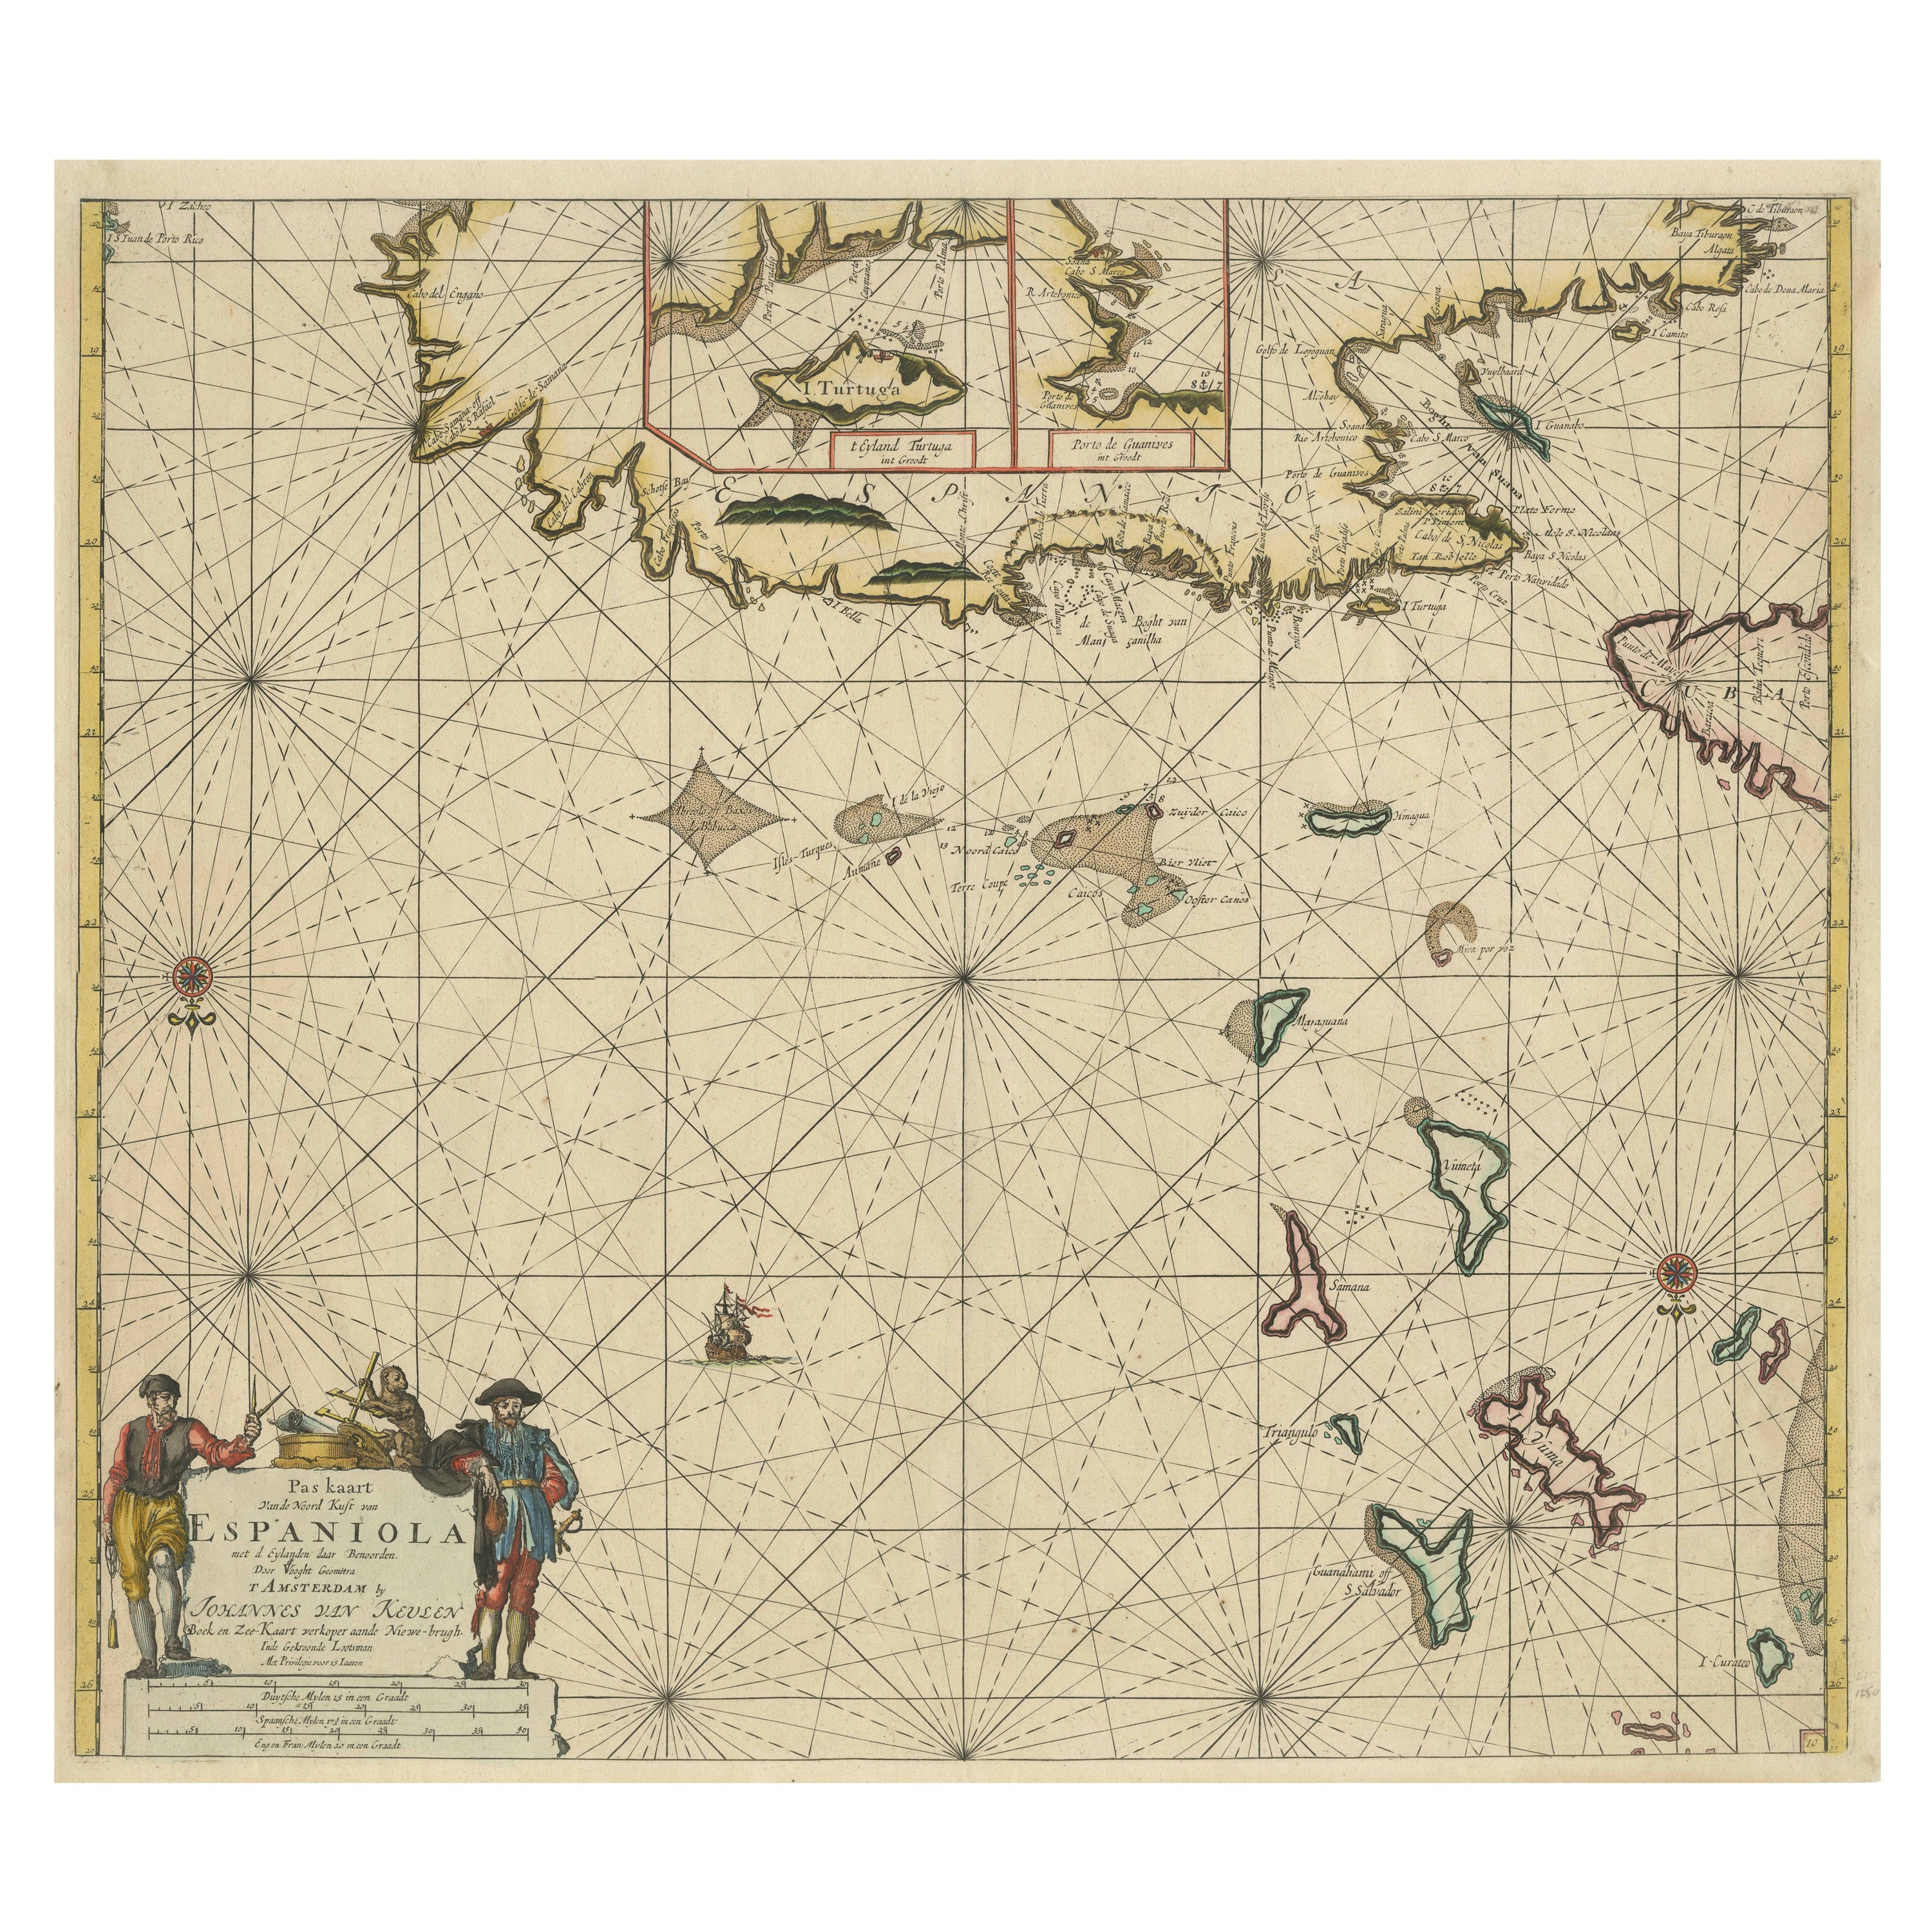 Tableau marin ancien d'origine de la partie nord de la Hispaniola, Cuba occidentale